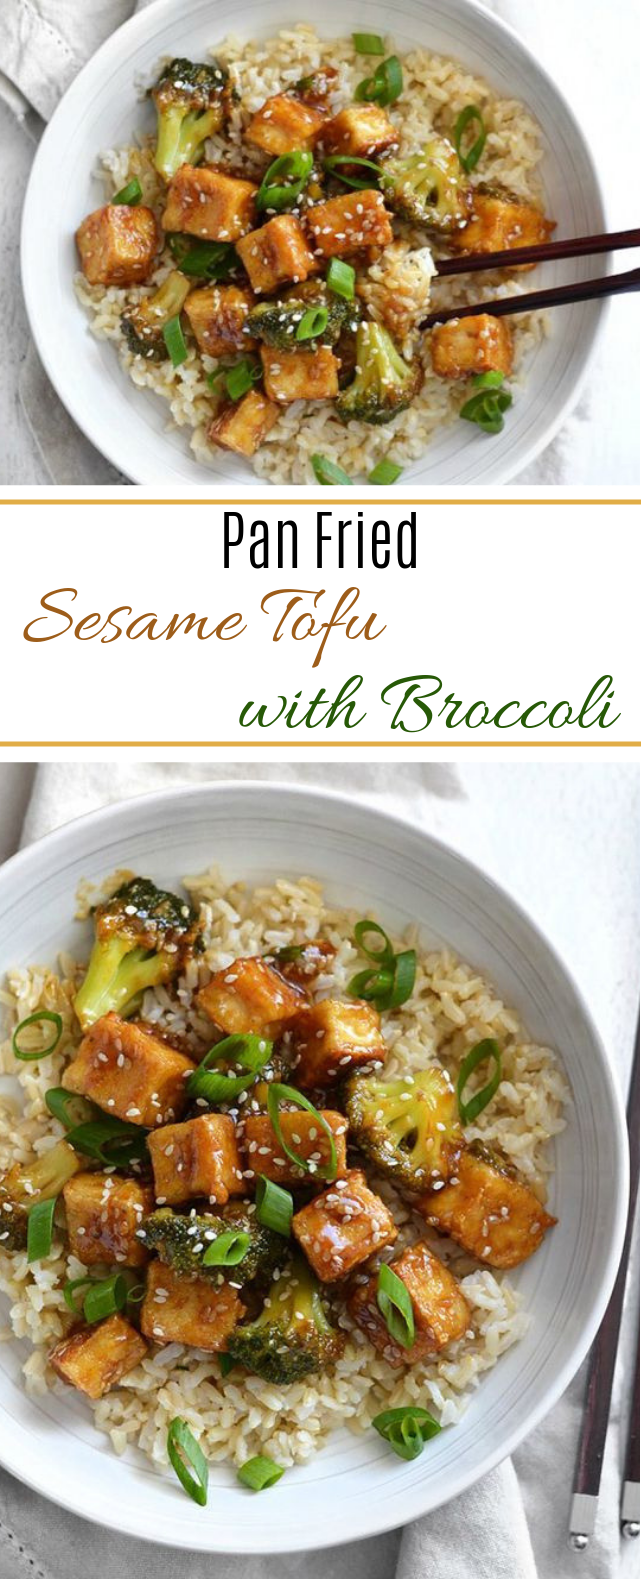 Pan Fried Sesame Tofu with Broccoli #sidedish #vegetarian